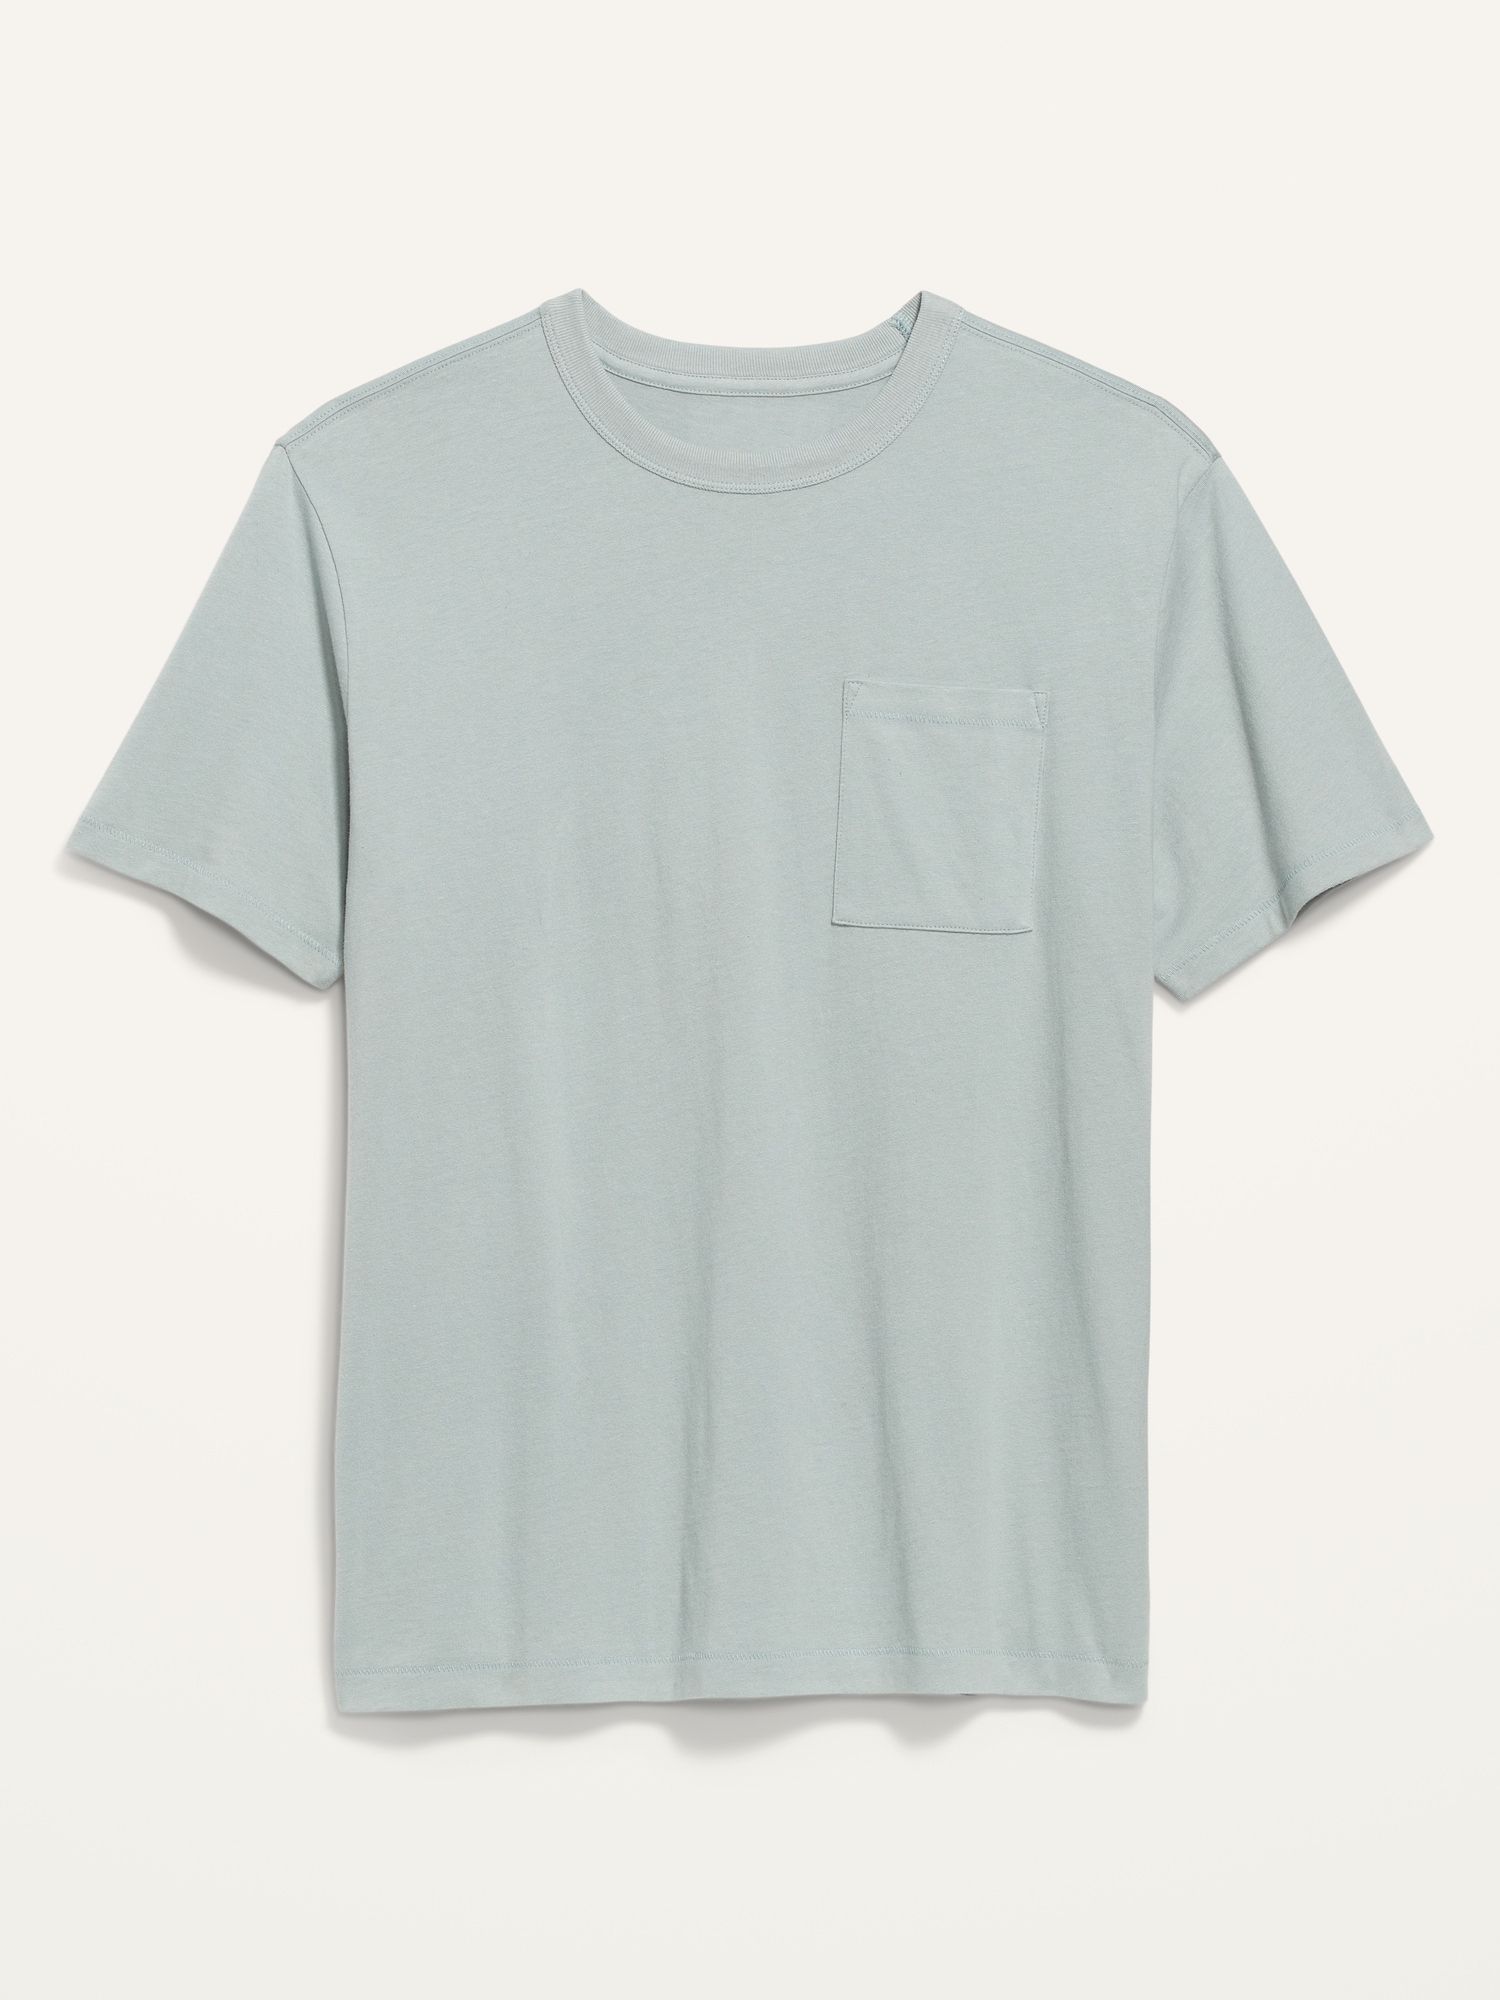 Loose-Fit Chest-Pocket Rotation T-Shirt for Men | Old Navy